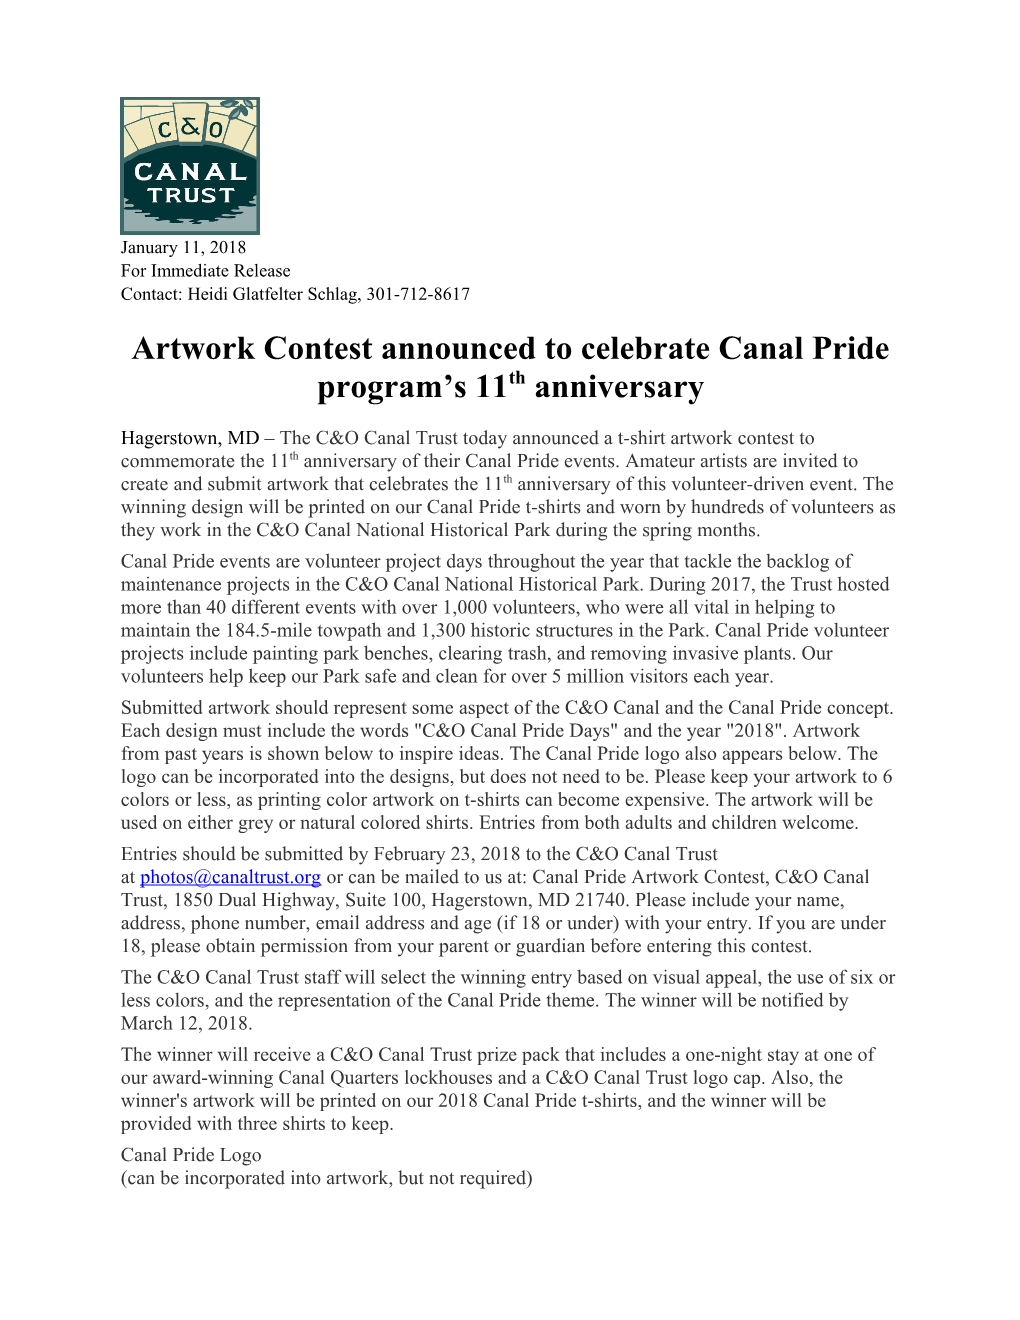 Artwork Contest Announced to Celebrate Canal Pride Program S 11Th Anniversary